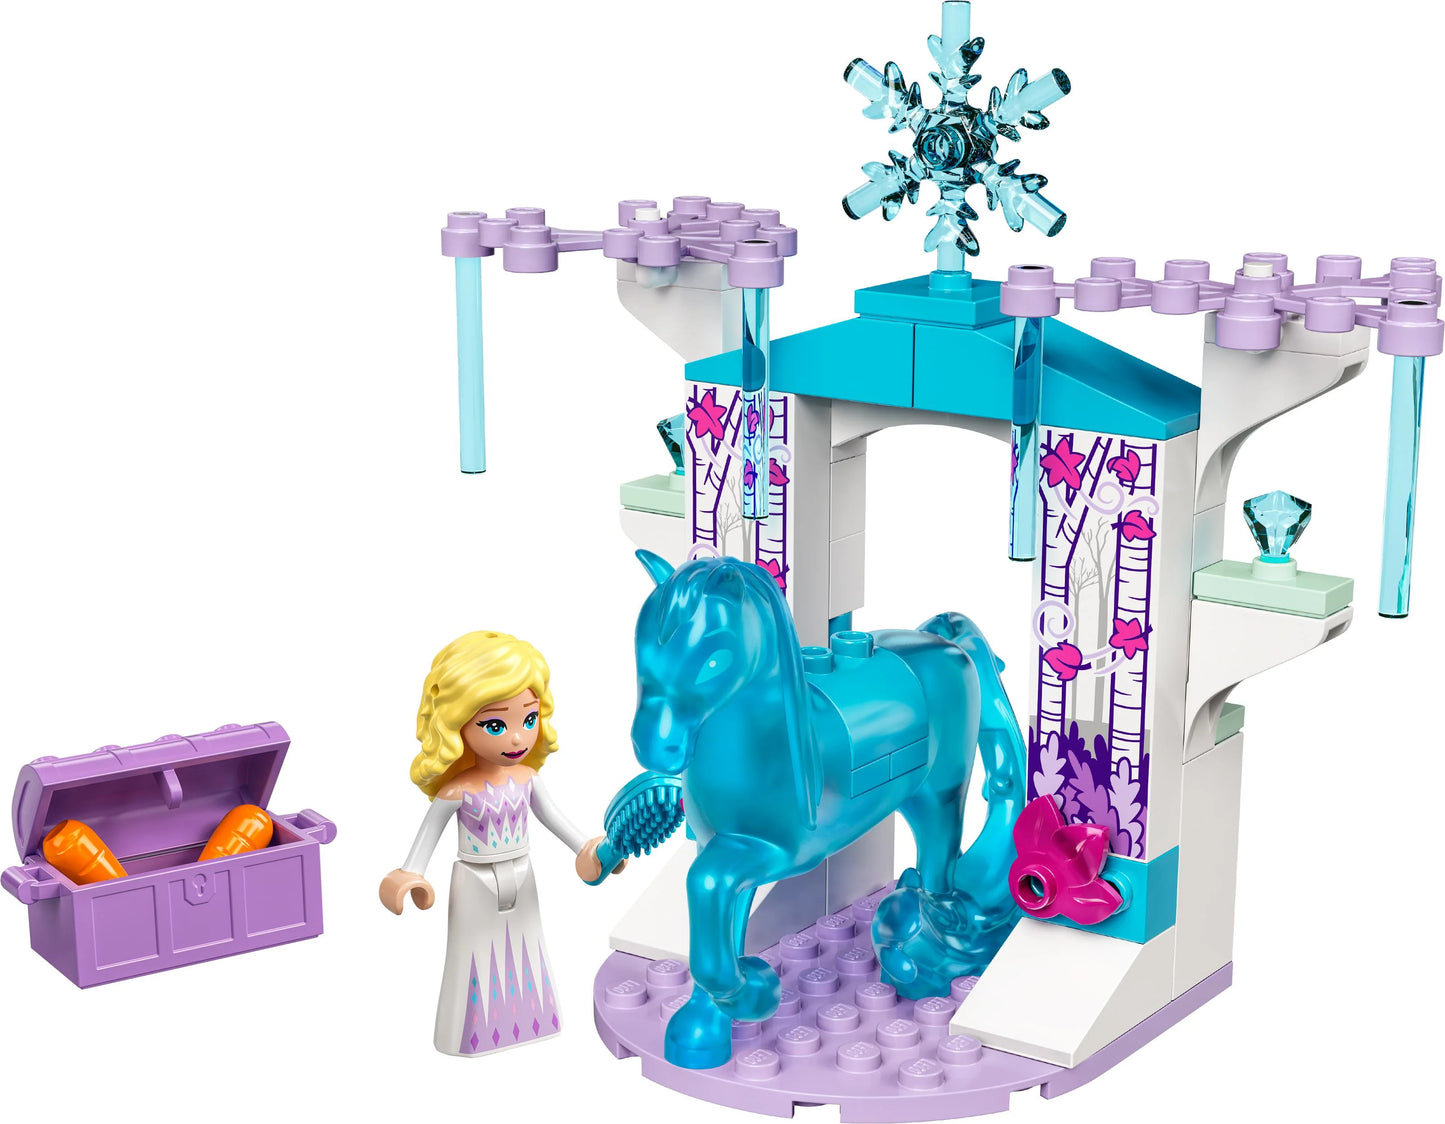 Elsa and the Nokk ice cream parlor - LEGO Disney